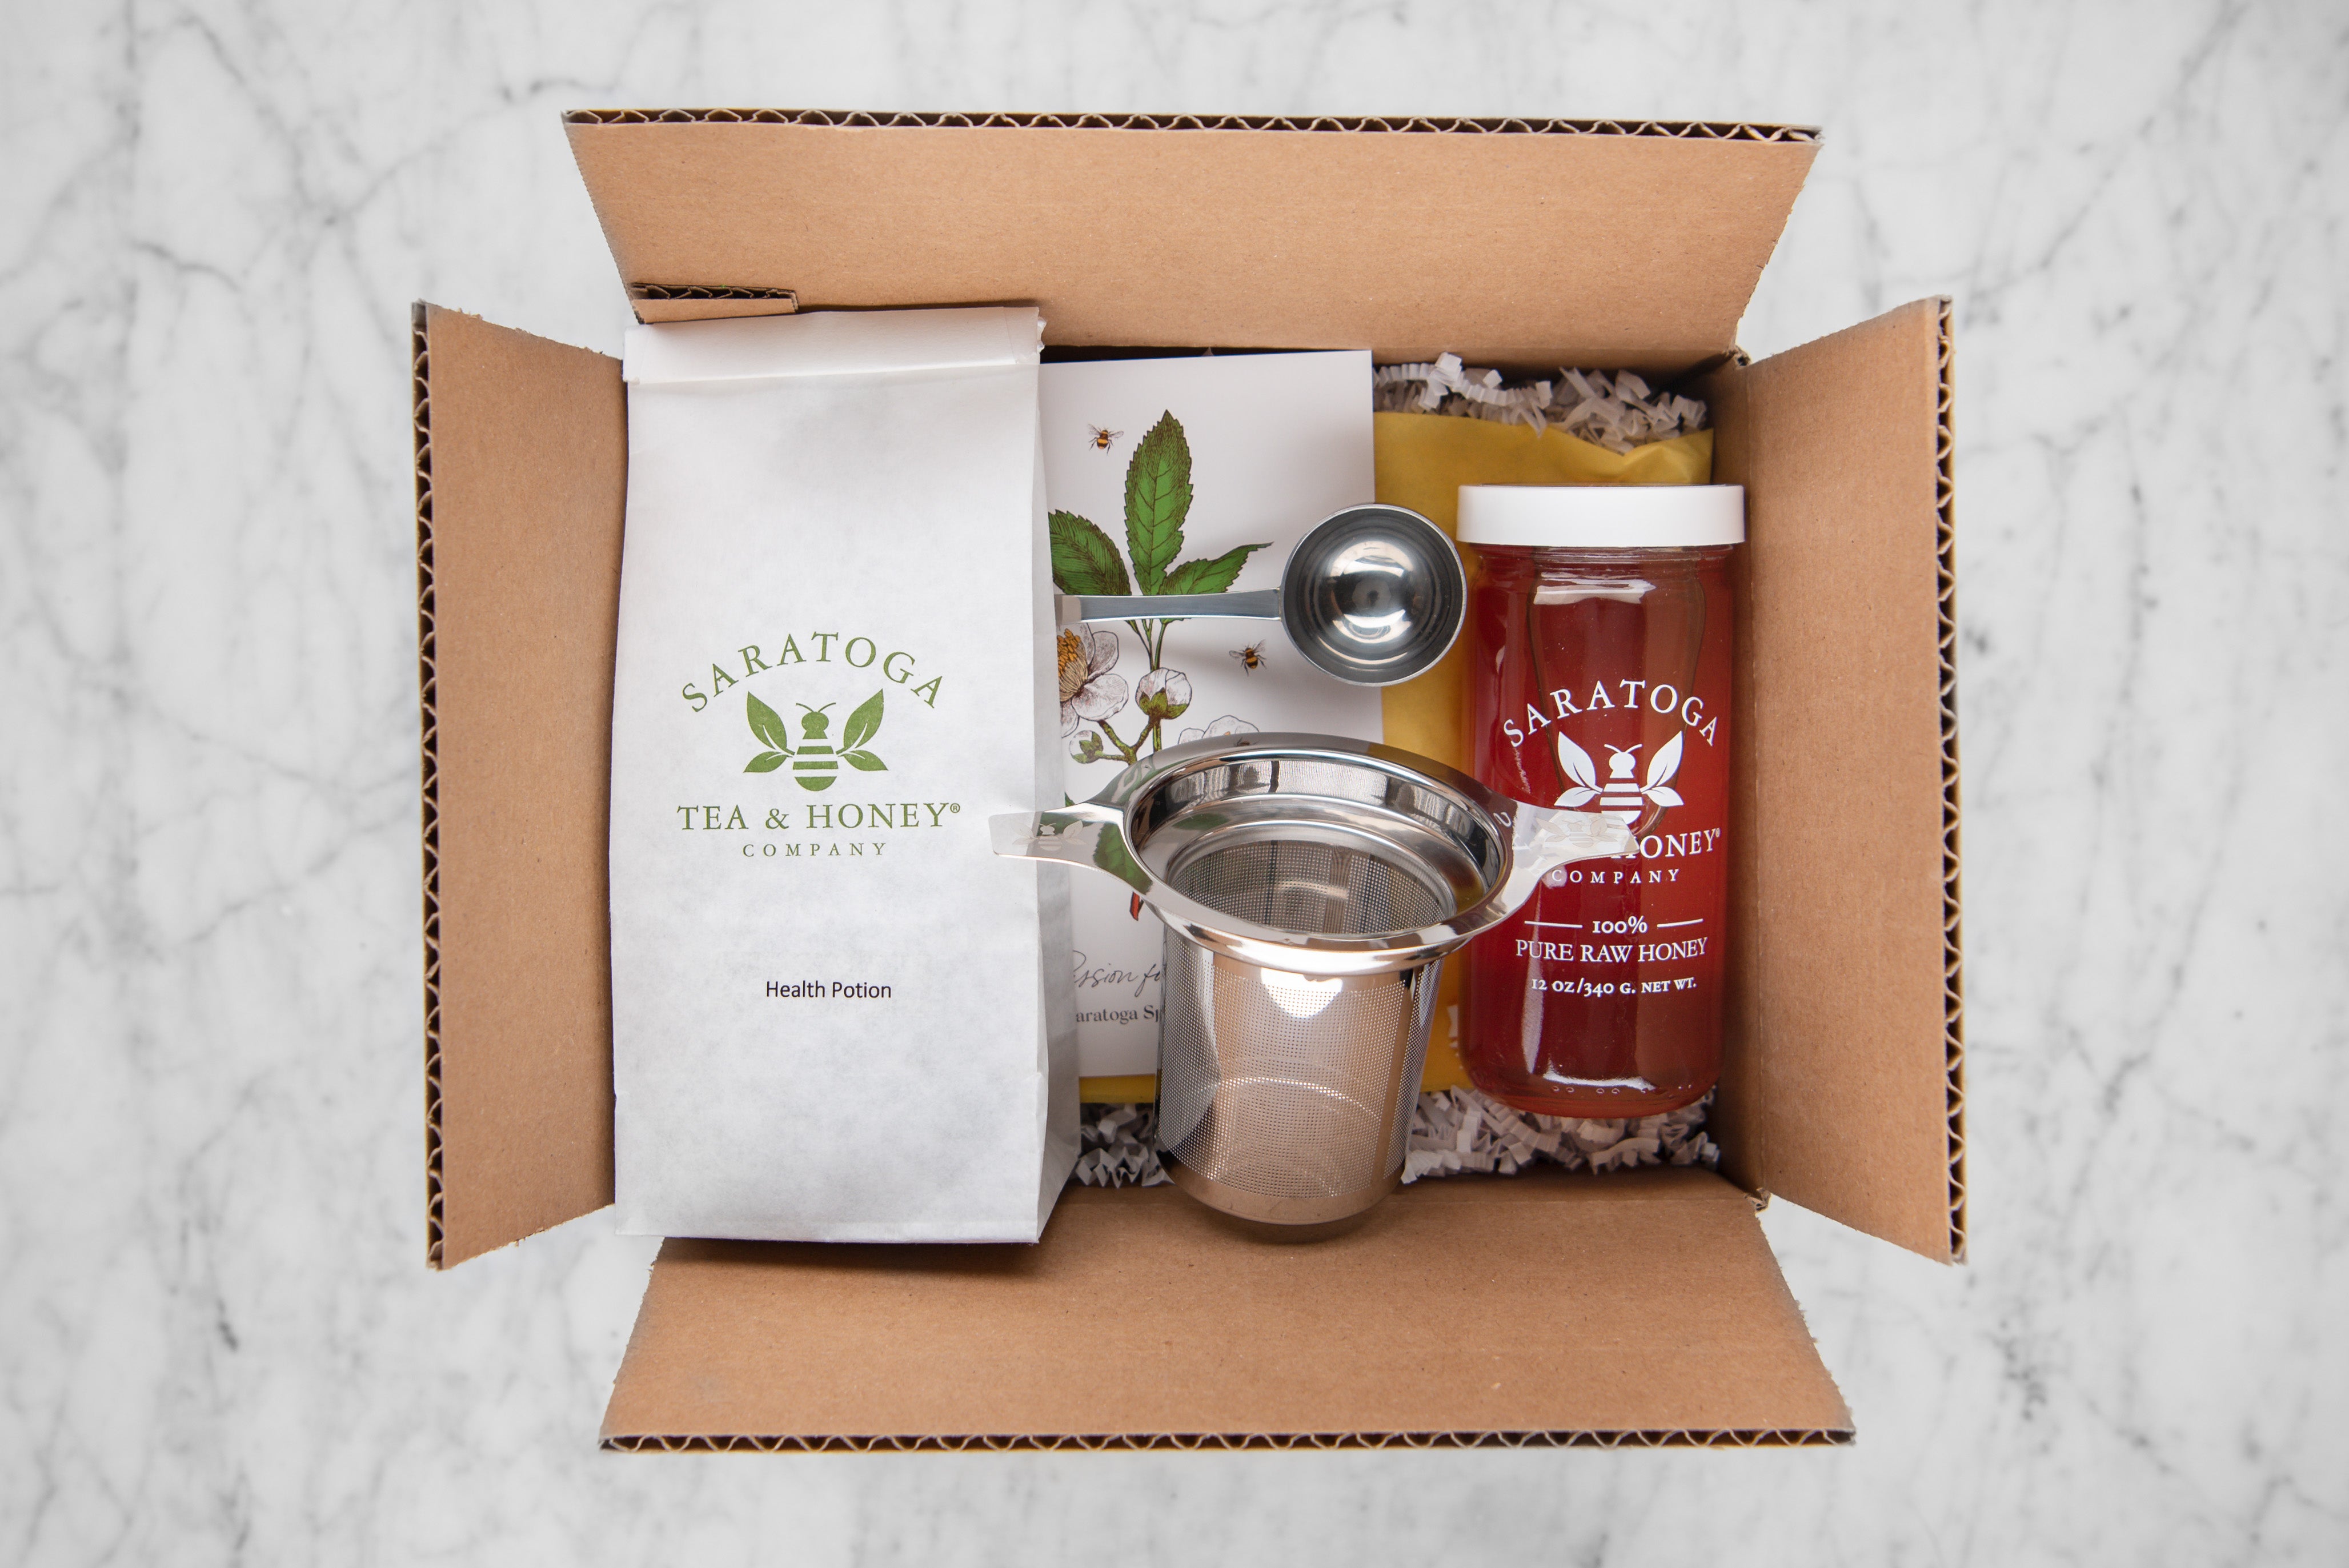 Get well soon box with health potion herbal tea, tea infuser, tea scoop, and elderberry infused honey